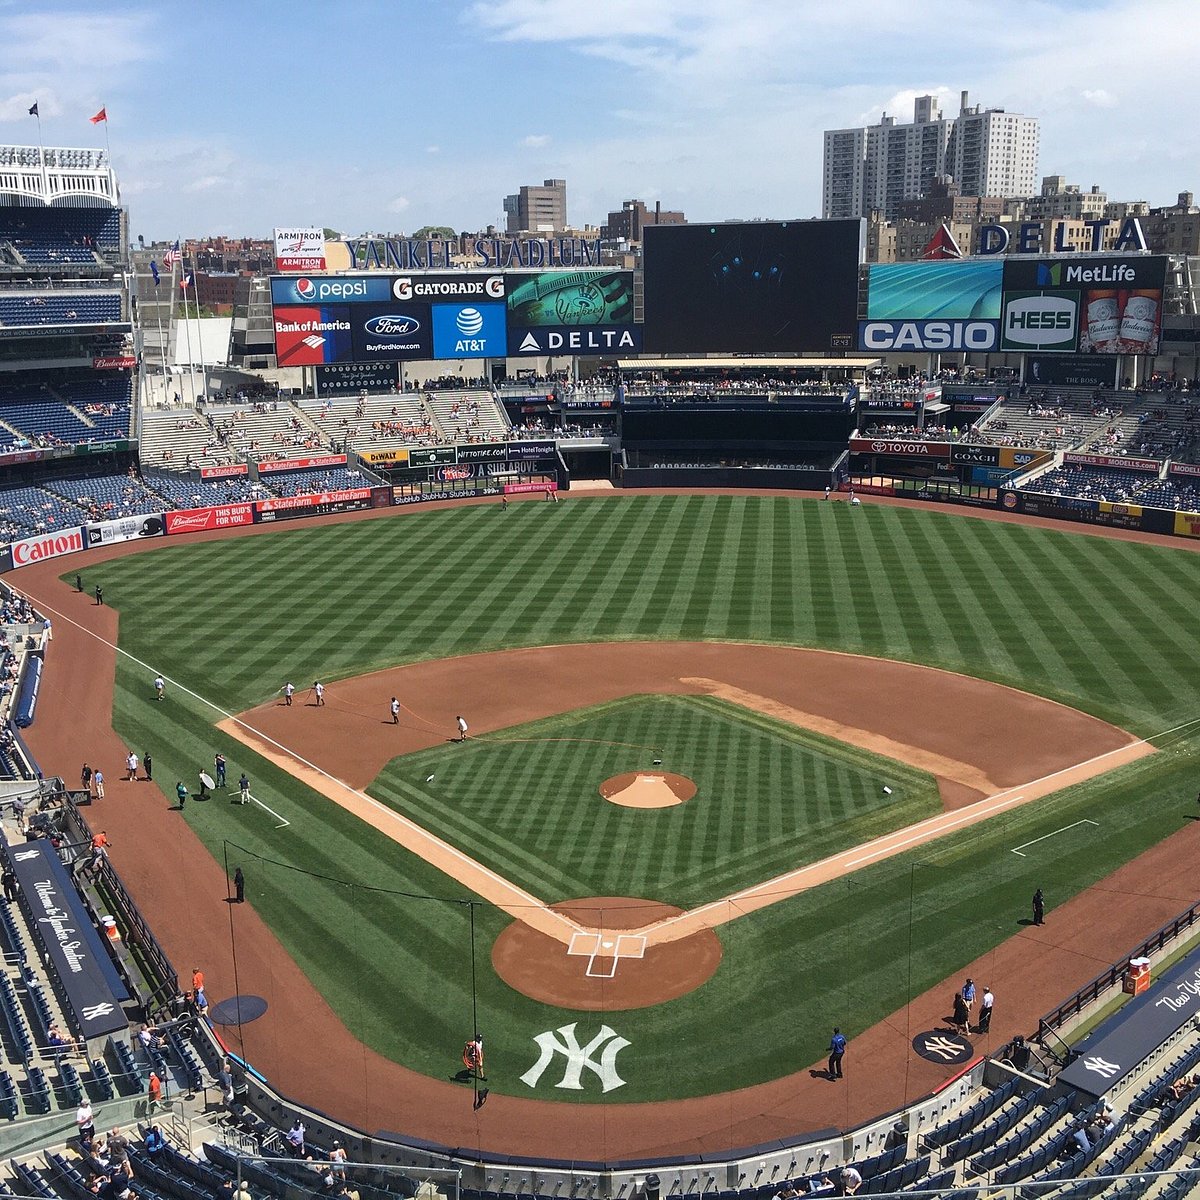 MLB (Baseball) - Ticket to see a Yankees Game at Yankee Stadium - New York